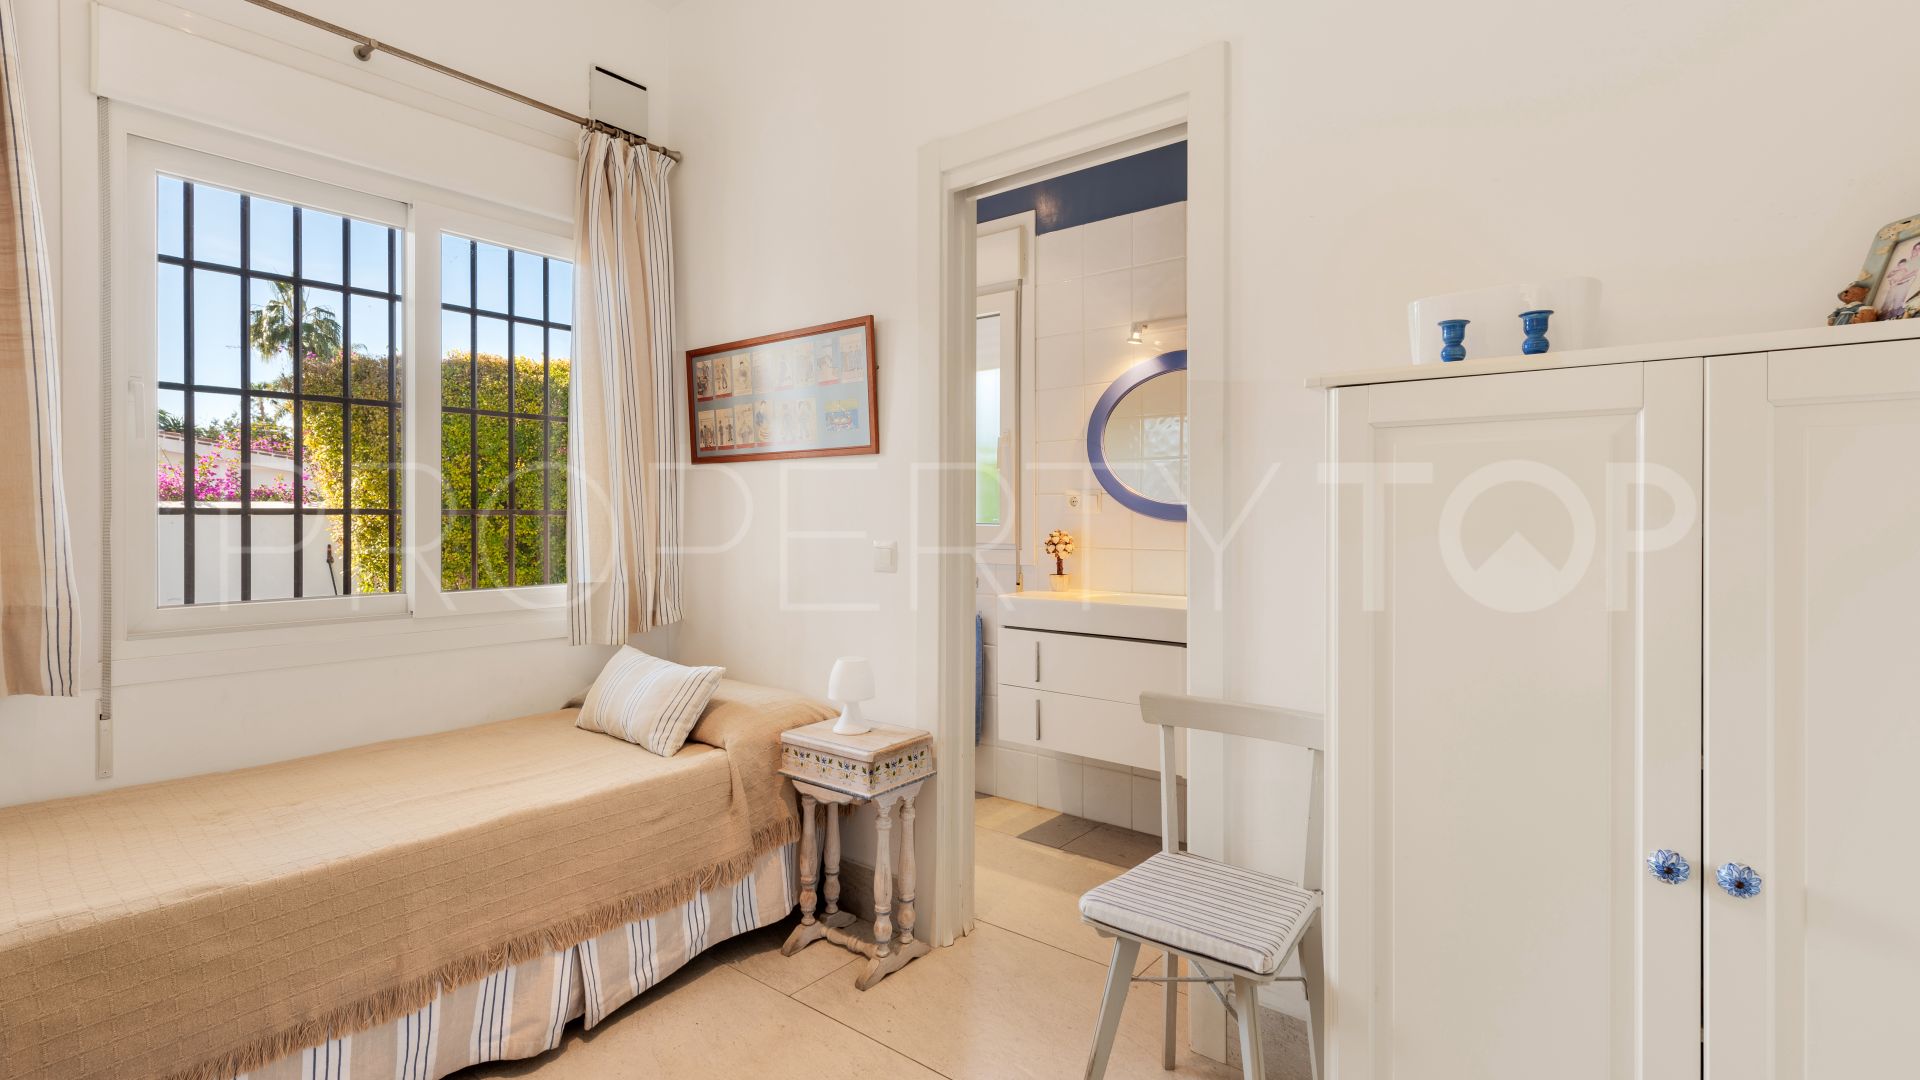 For sale villa in Cortijo Blanco with 5 bedrooms